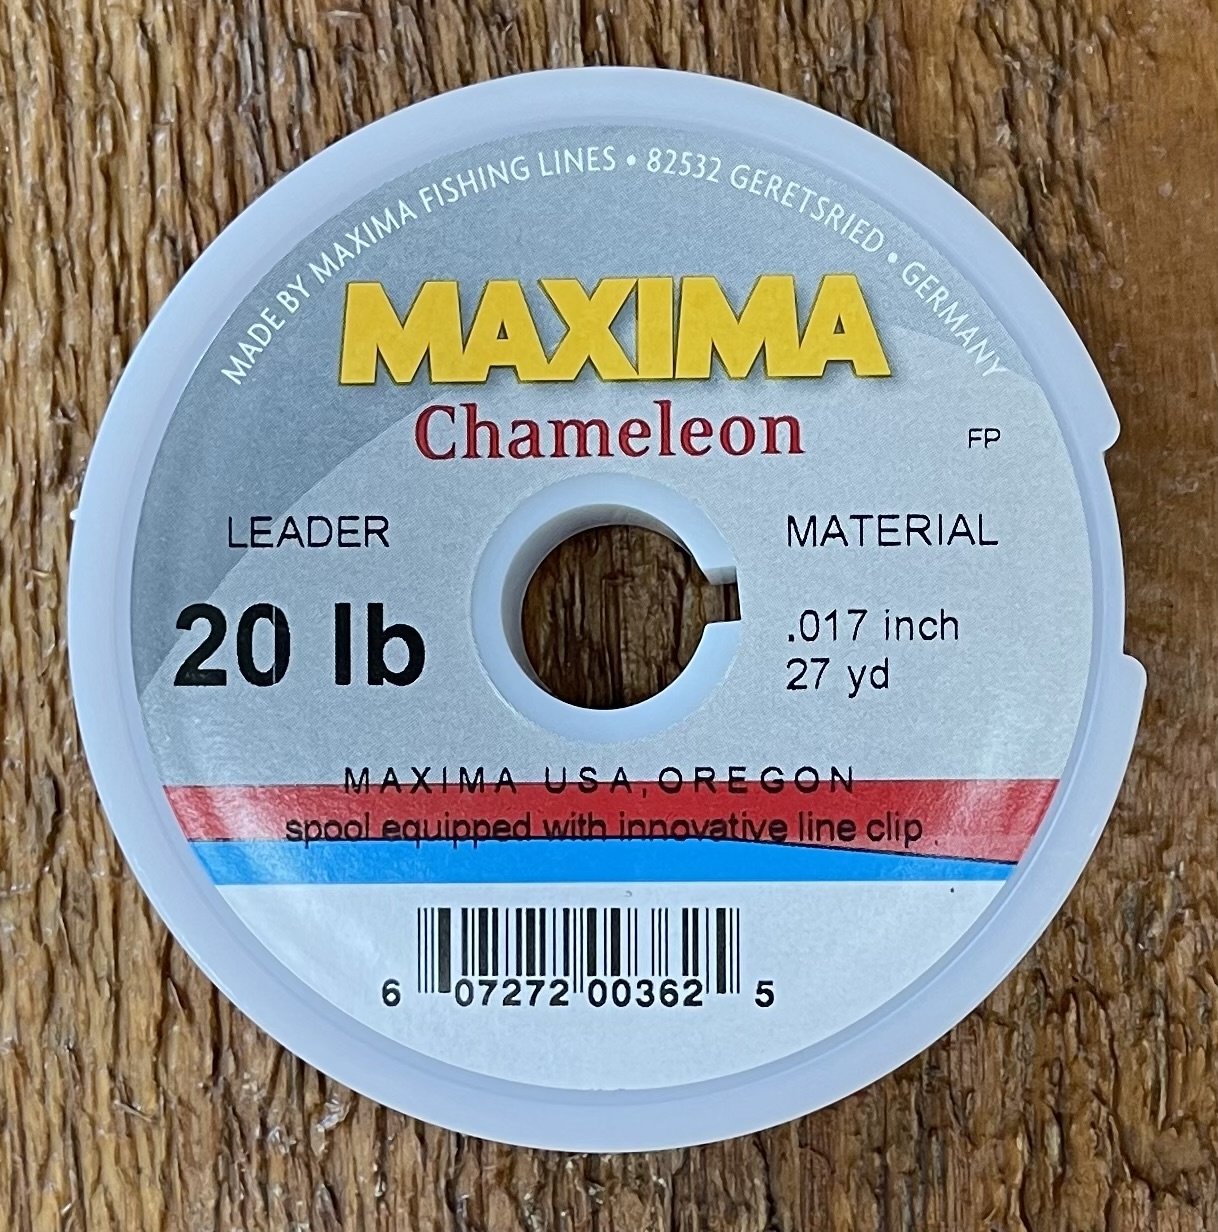 Maxima Chameleon Leader Material 27yd Spool - Blue Ribbon Flies